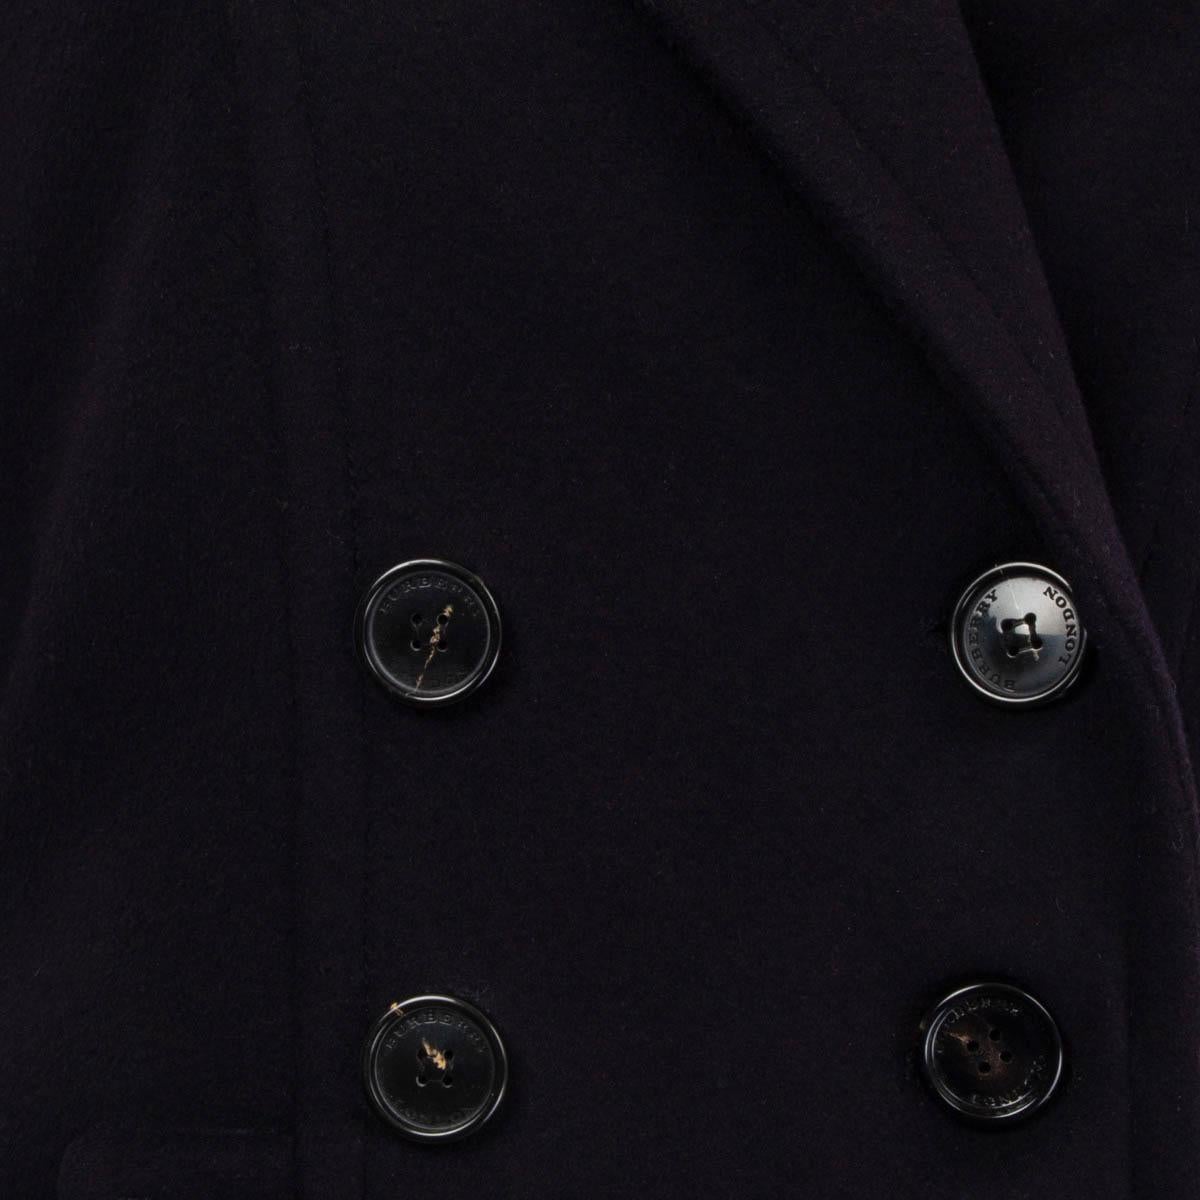 Black BURBERRY LONDON midnight blue wool & cashmere PEACOAT Coat Jacket 10 M